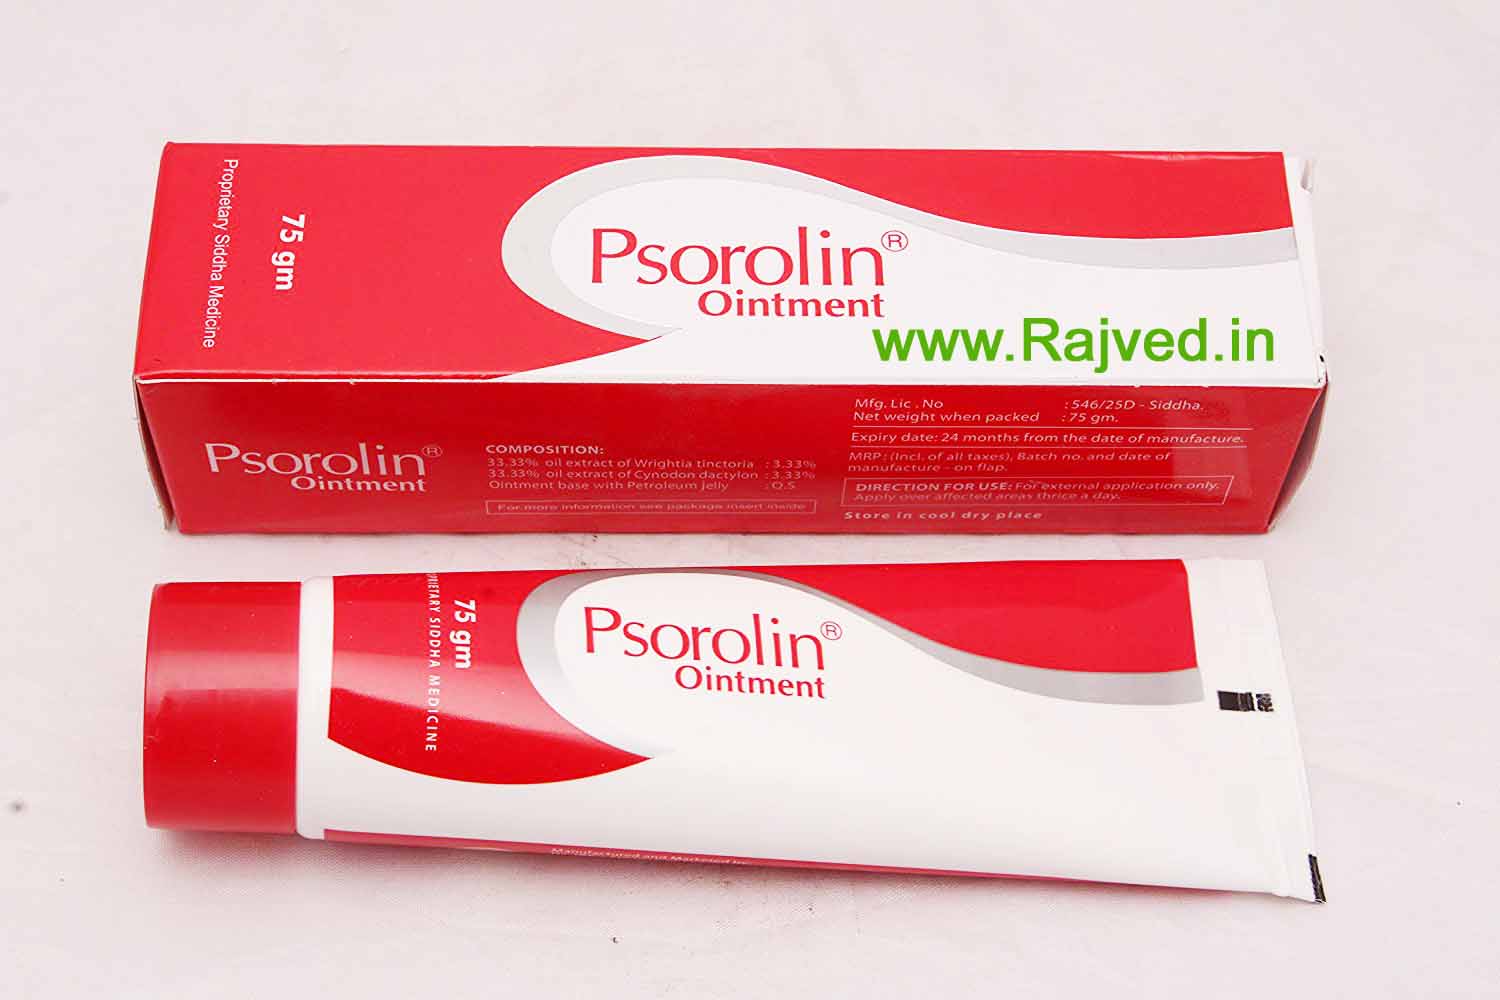 Psorolin oint 35 gm now psorolin B ointment 35gm 15% off dr.jrk siddha research pharma